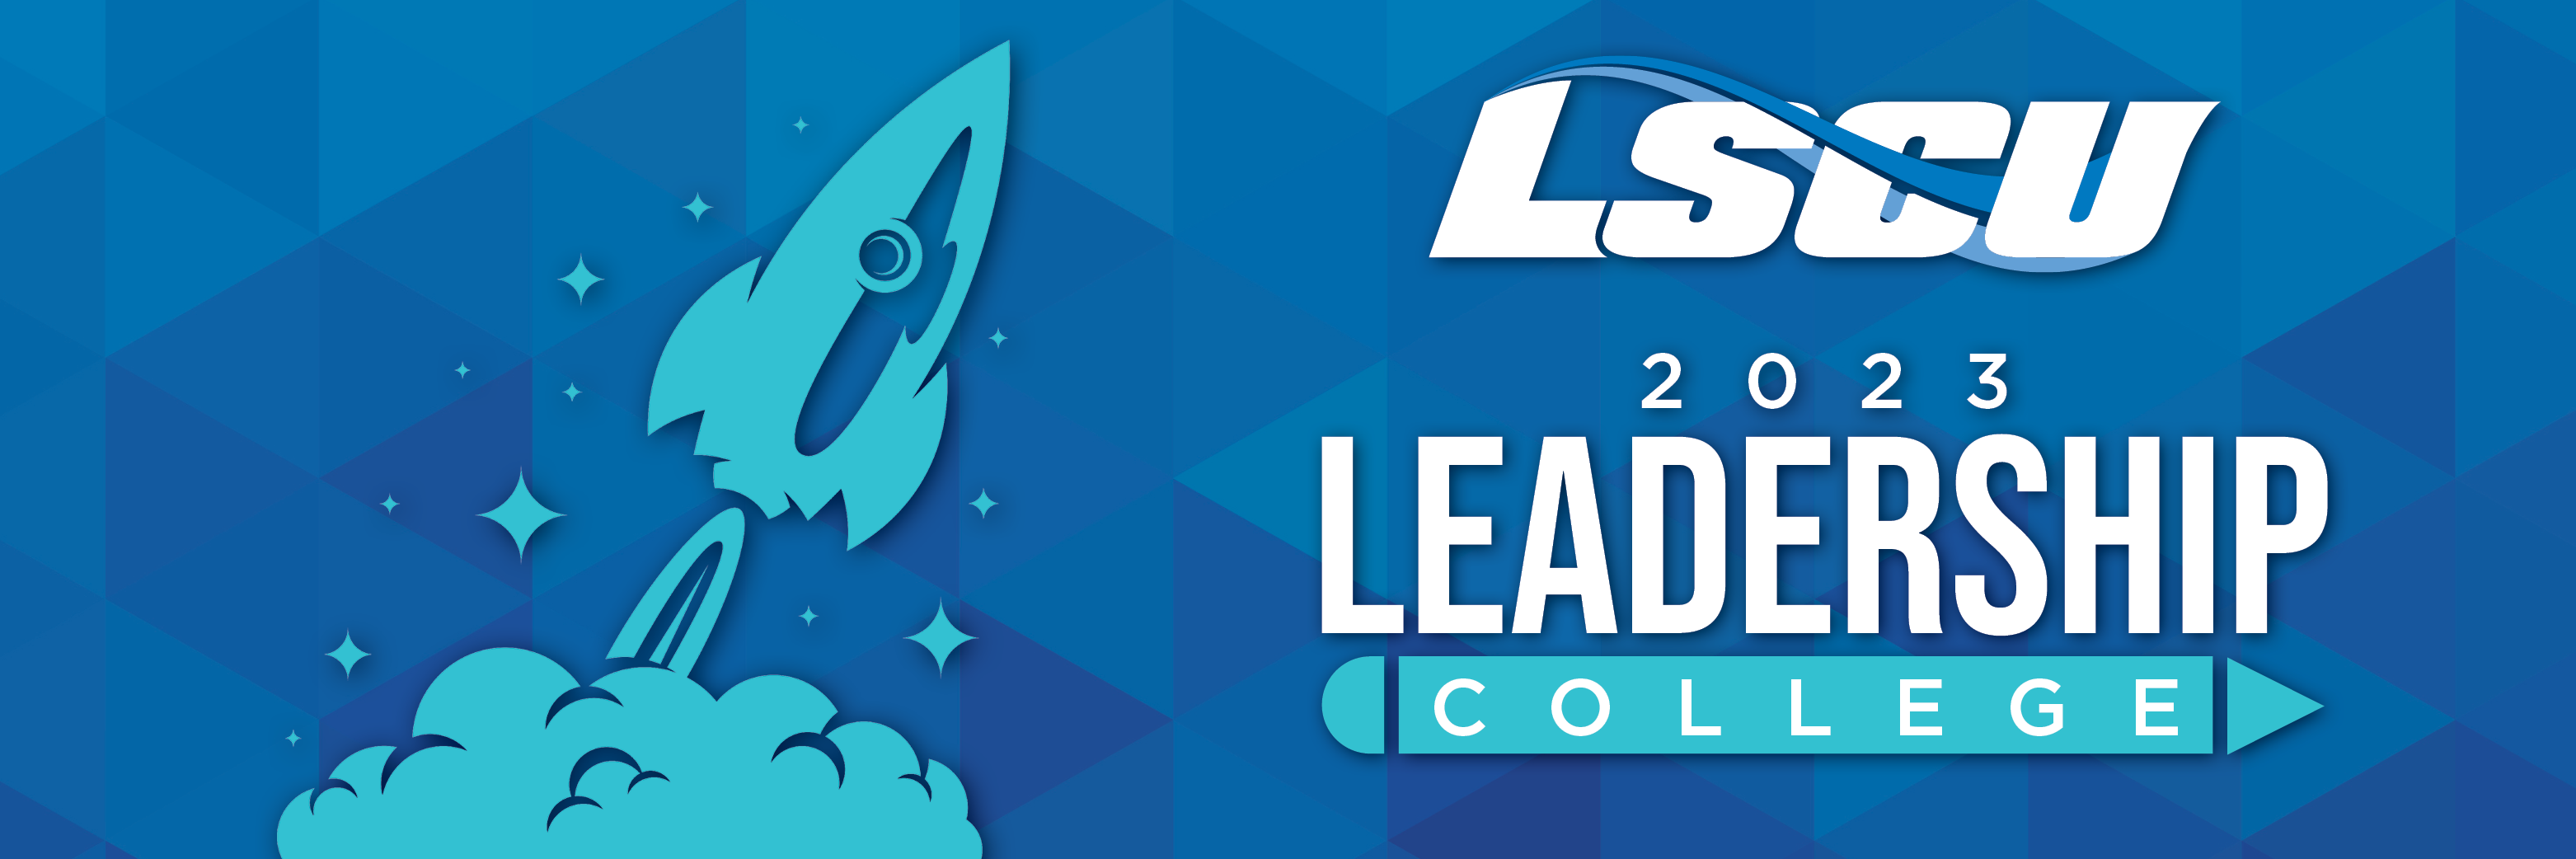 2021 Leadershp College Flash Sale